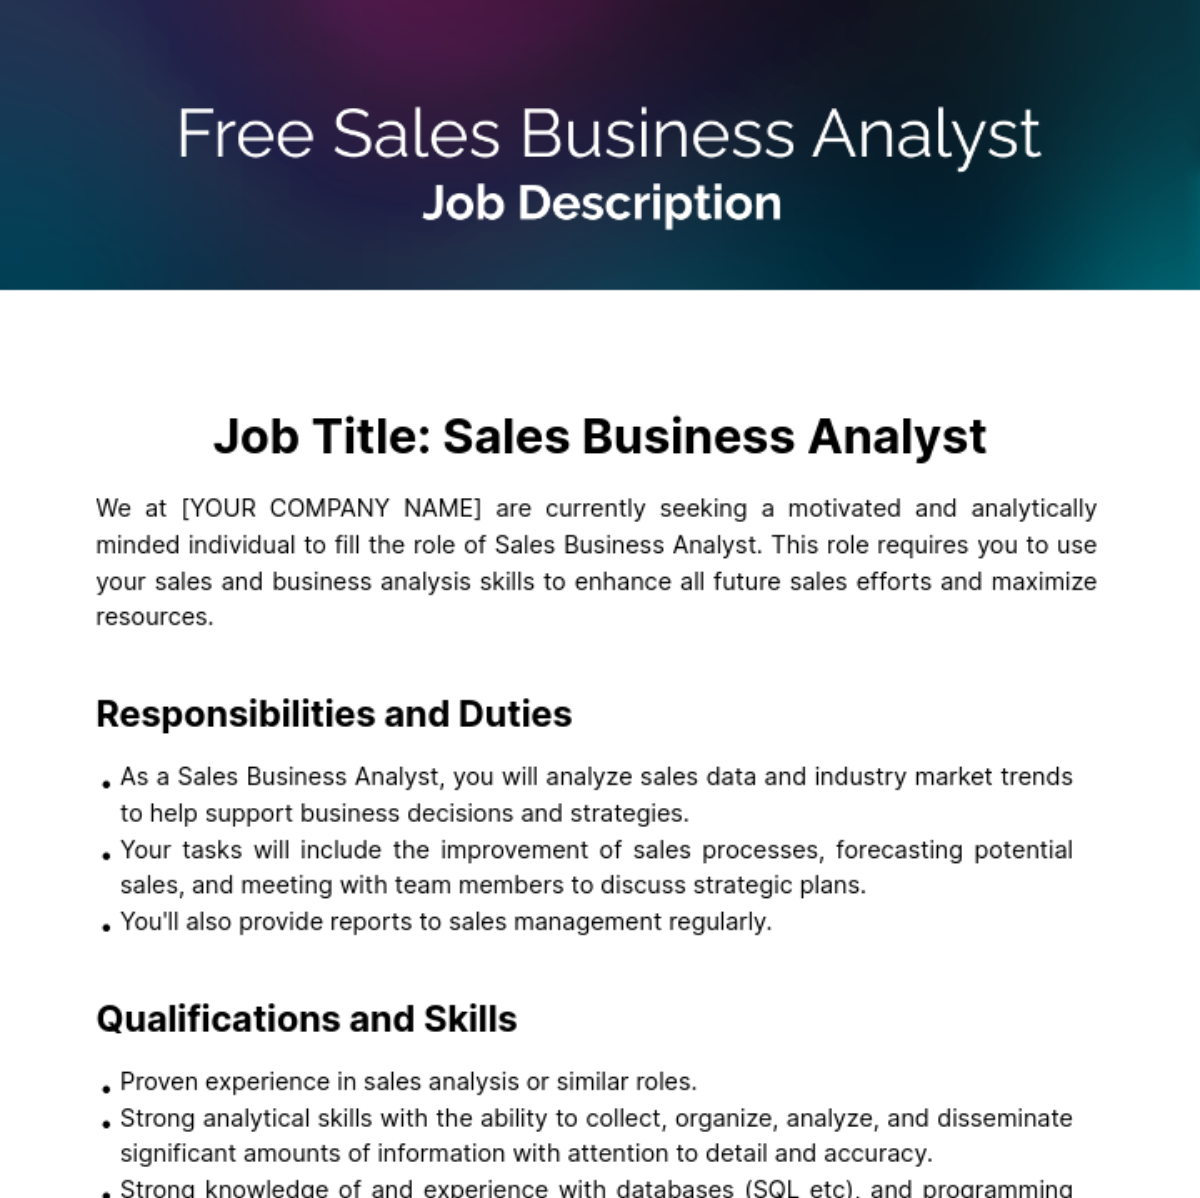 Sales Business Analyst Job Description Template